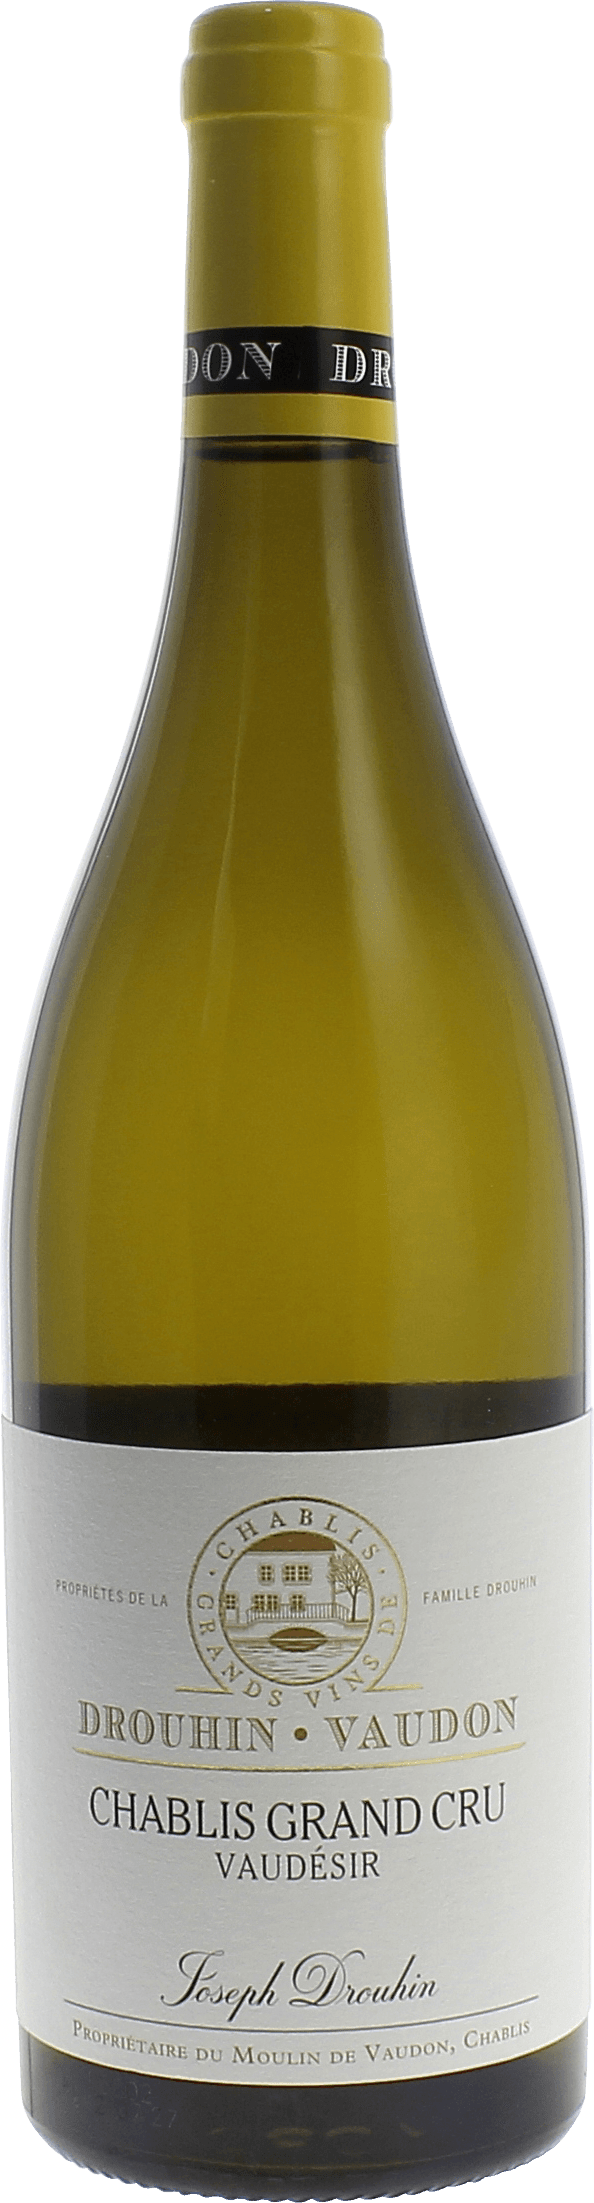 Chablis grand cru vaudsir 2016 Domaine Joseph DROUHIN, Bourgogne blanc